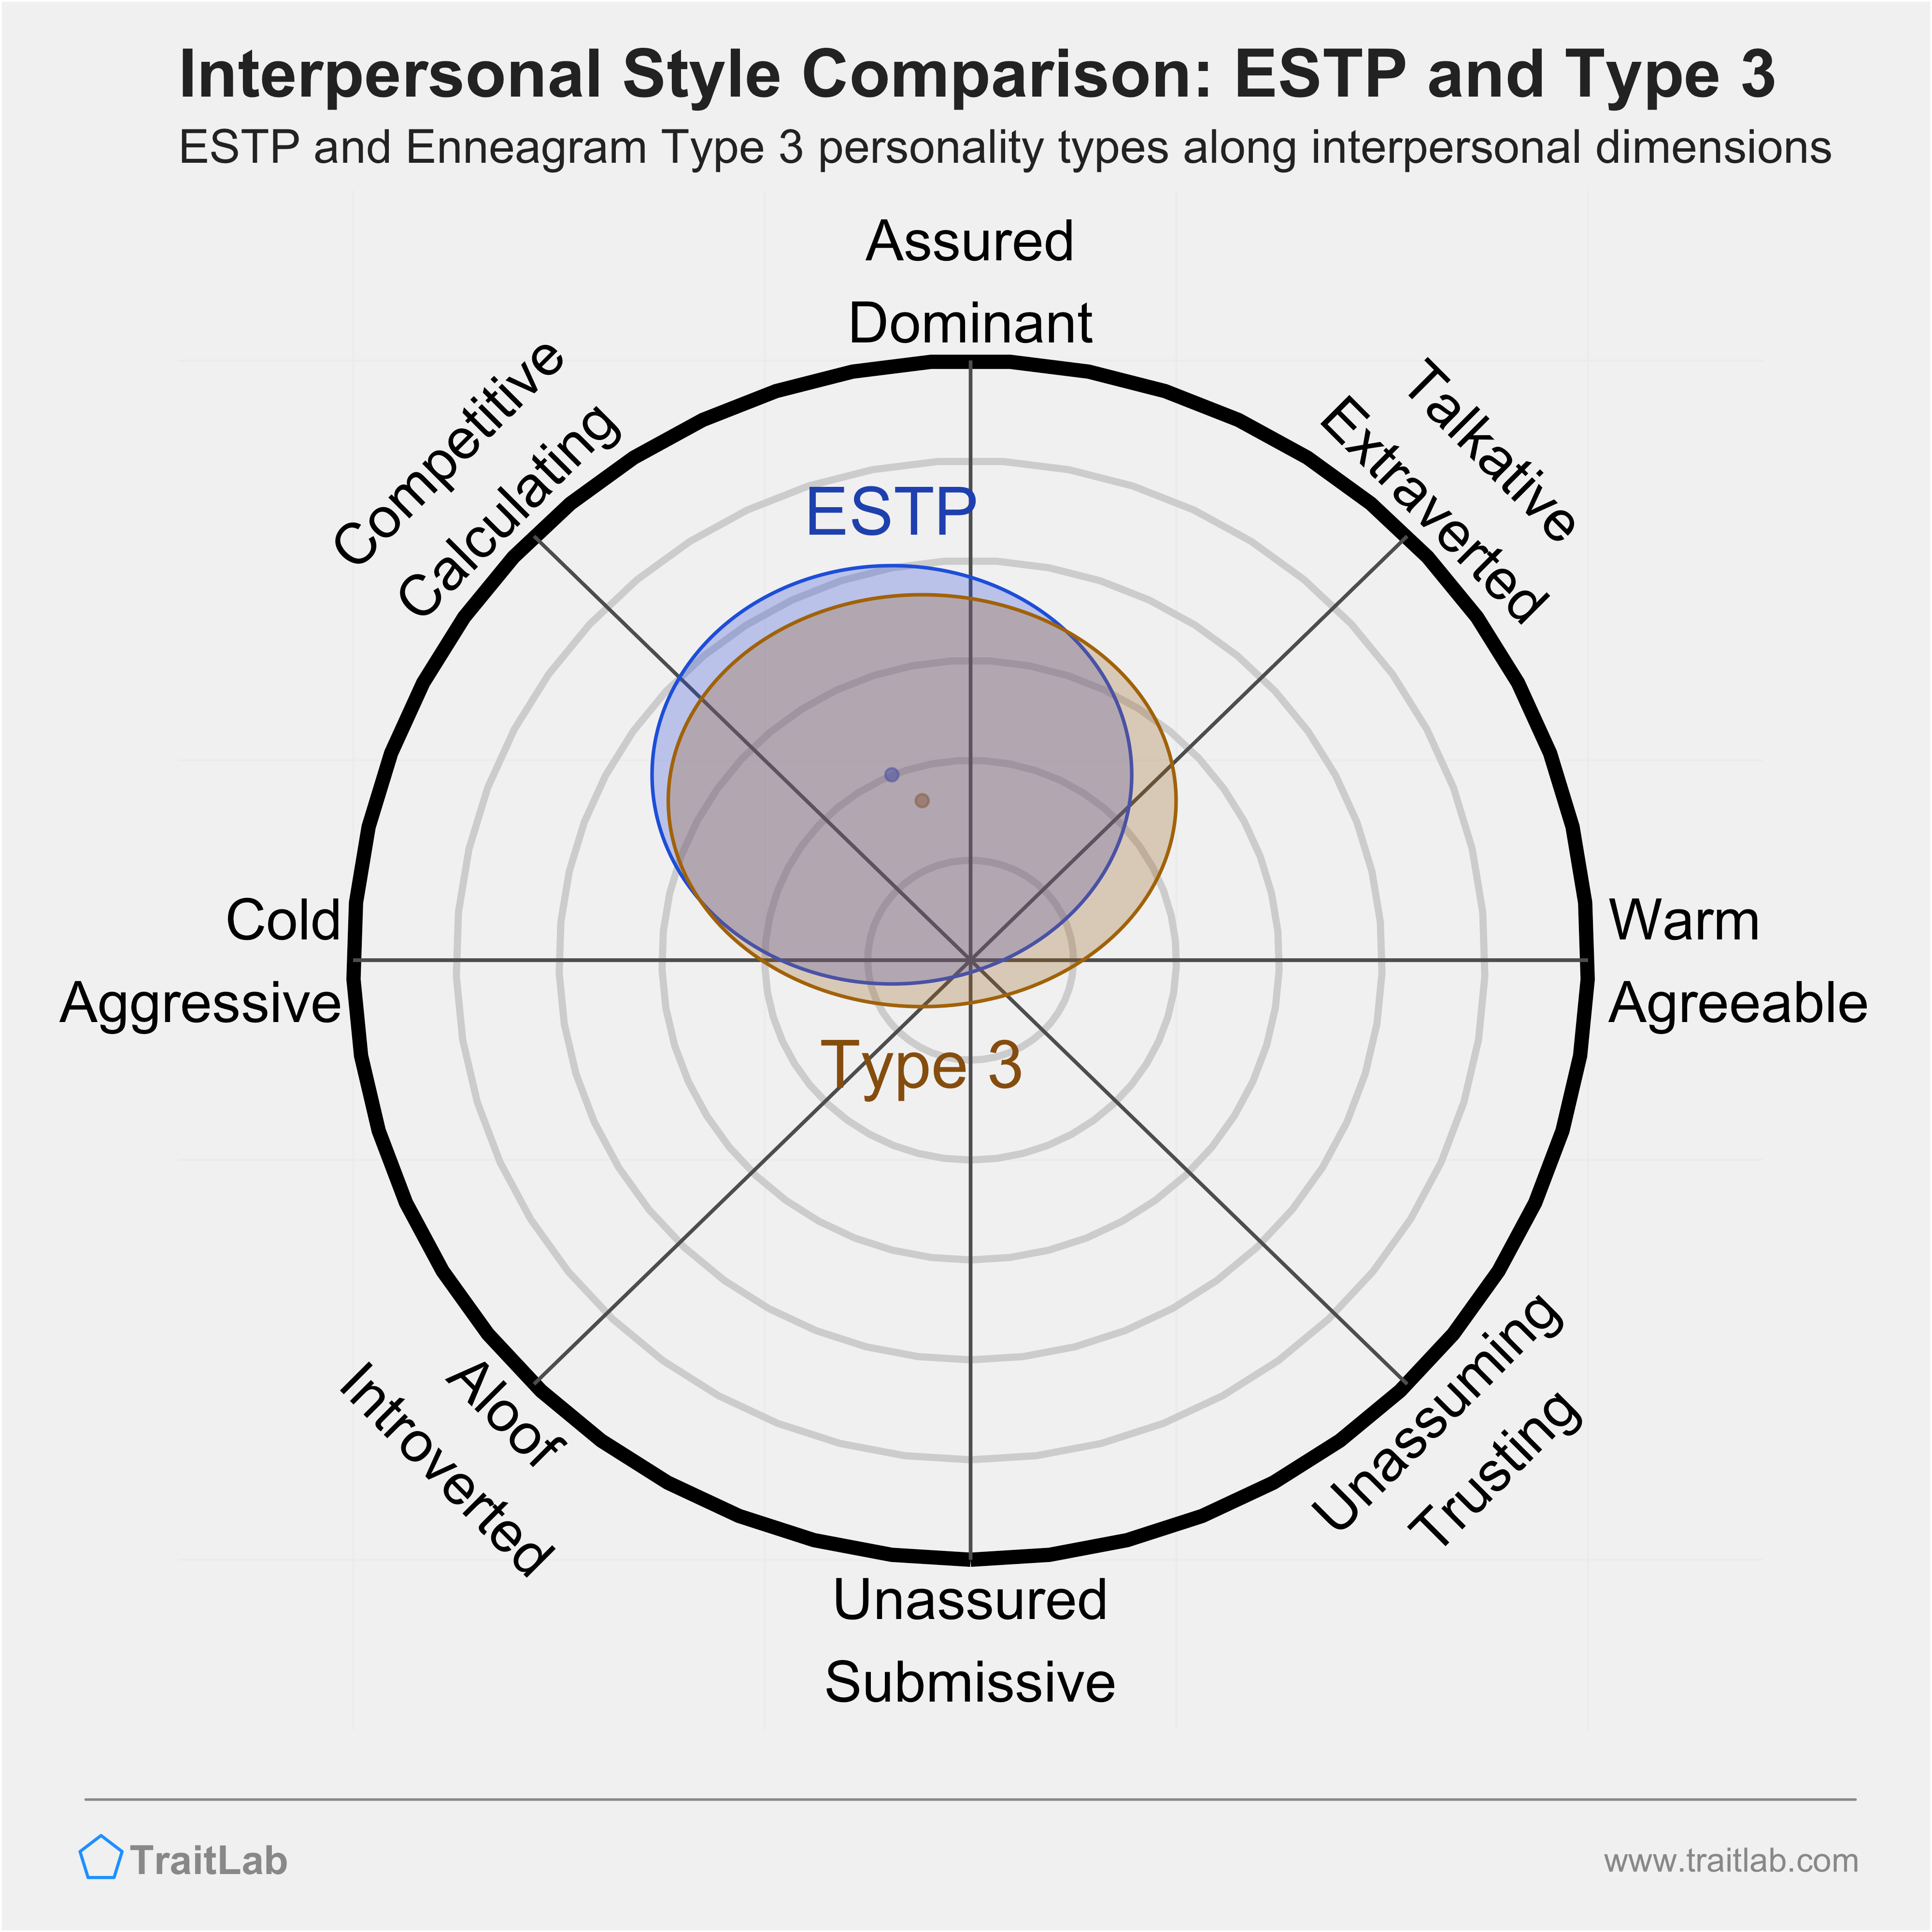 Enneagram ESTP and Type 3 comparison across interpersonal dimensions